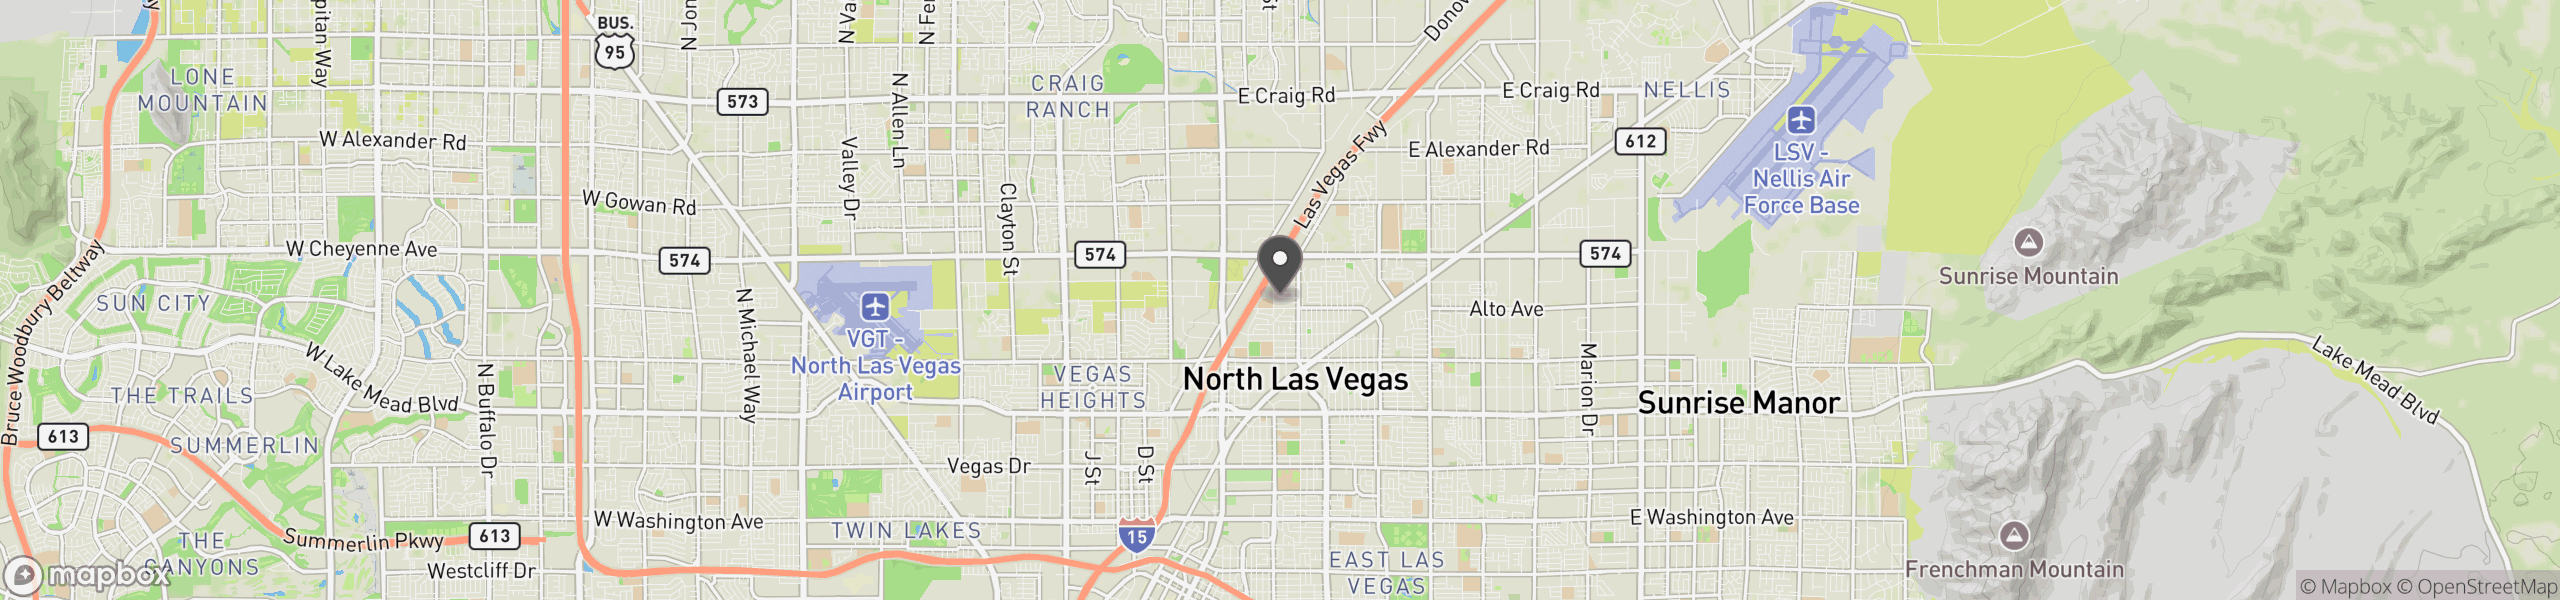 North Las Vegas, NV 89030